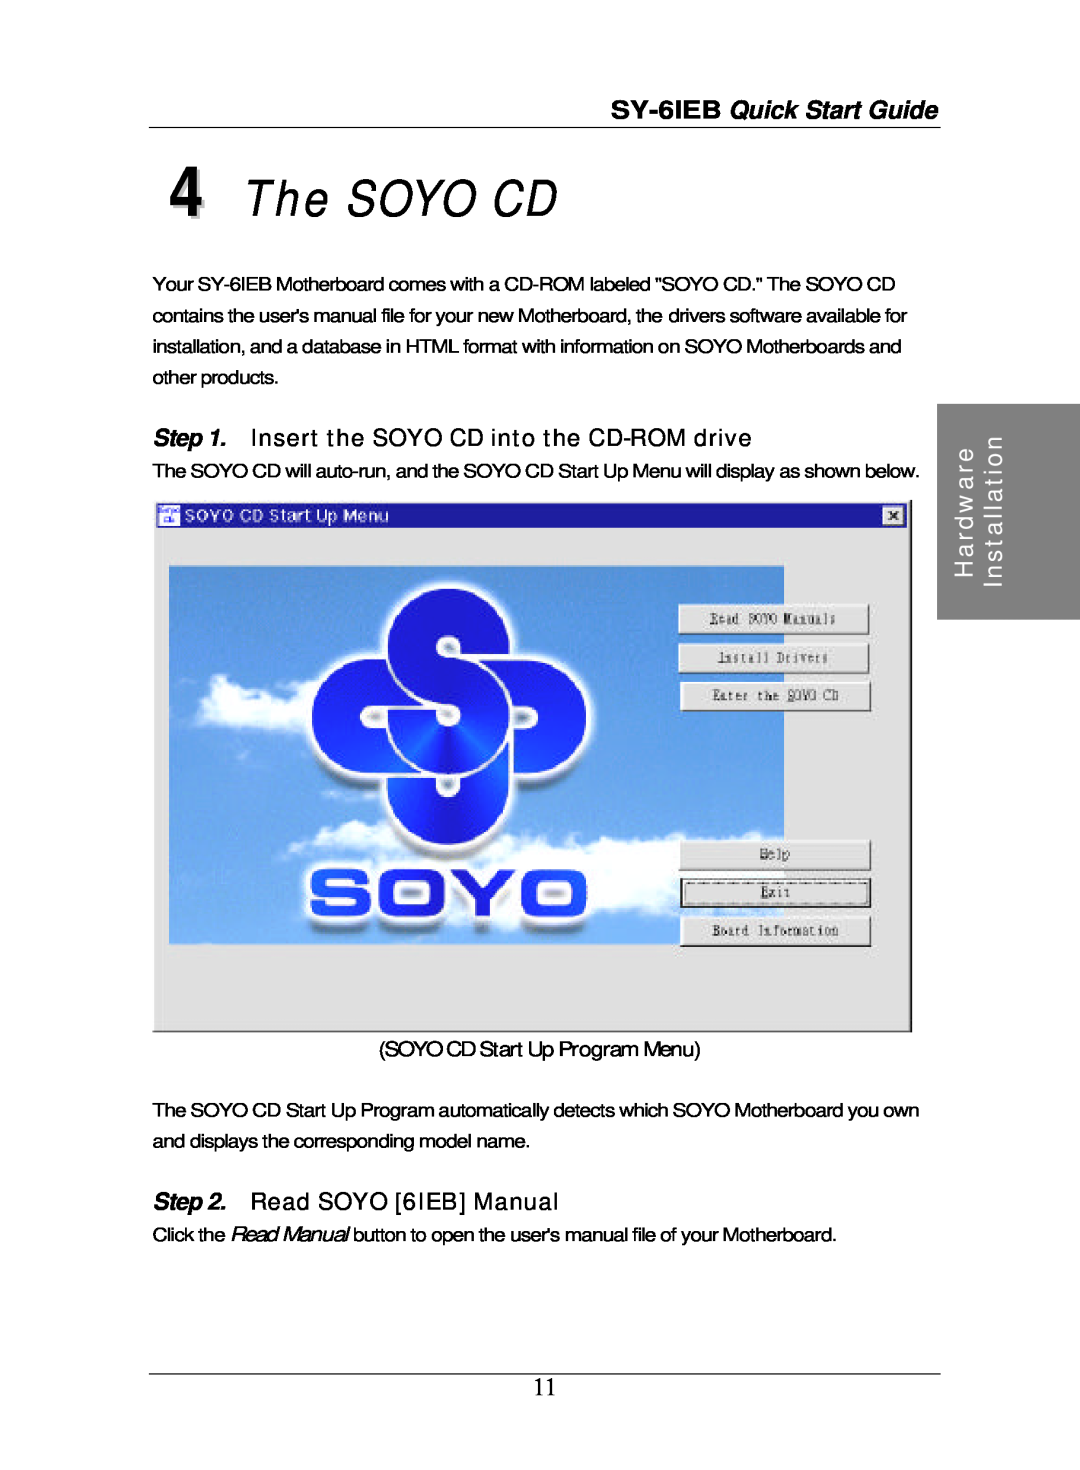 SOYO SY-6IEB The SOYO CD, Insert the SOYO CD into the CD-ROM drive, Read SOYO 6IEB Manual, SOYO CD Start Up Program Menu 